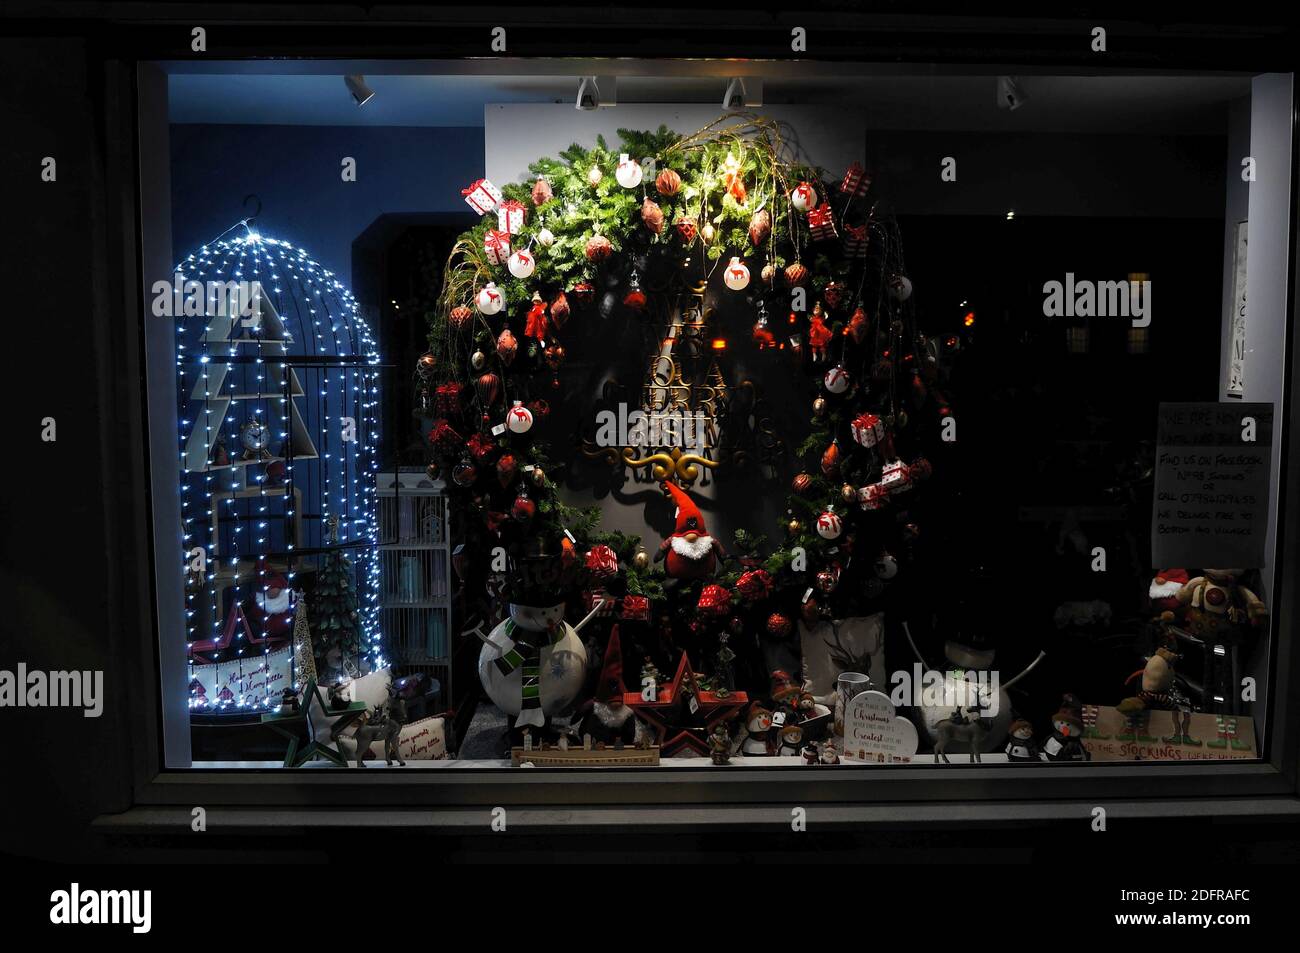 Christmas Shop Festive Decorations Window Father Christmas Stockfotos Und Bilder Kaufen Alamy